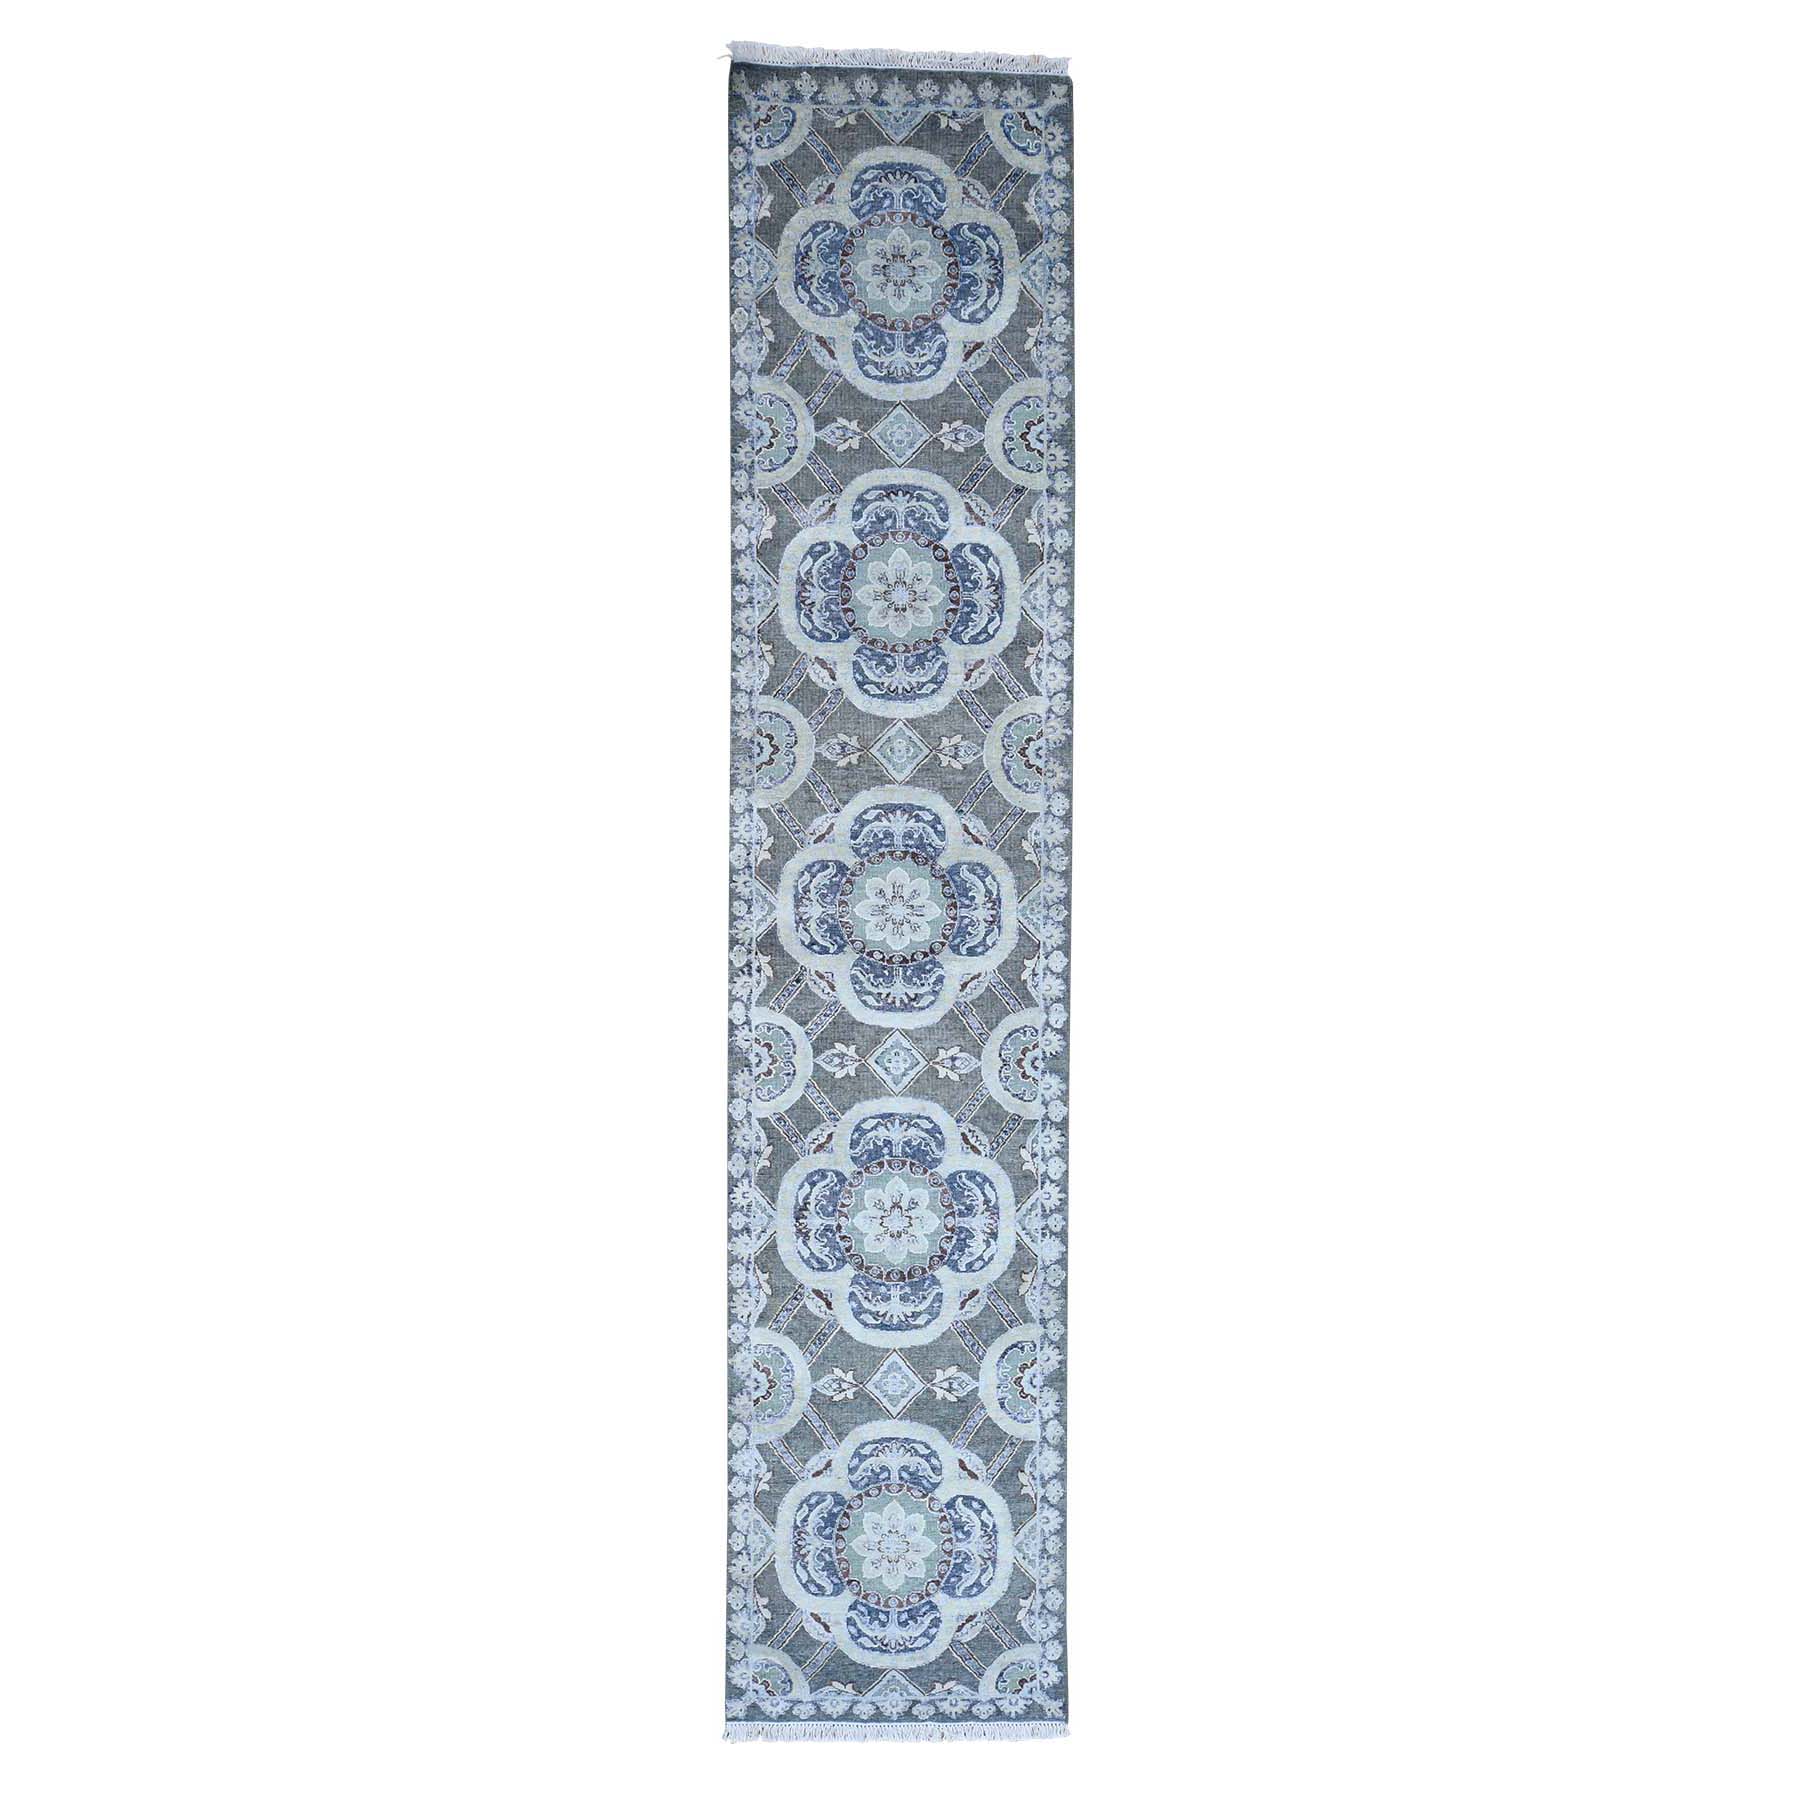 2'6"x12' Silk with Textured Wool Rosette Design Hand Woven Oriental Rug 